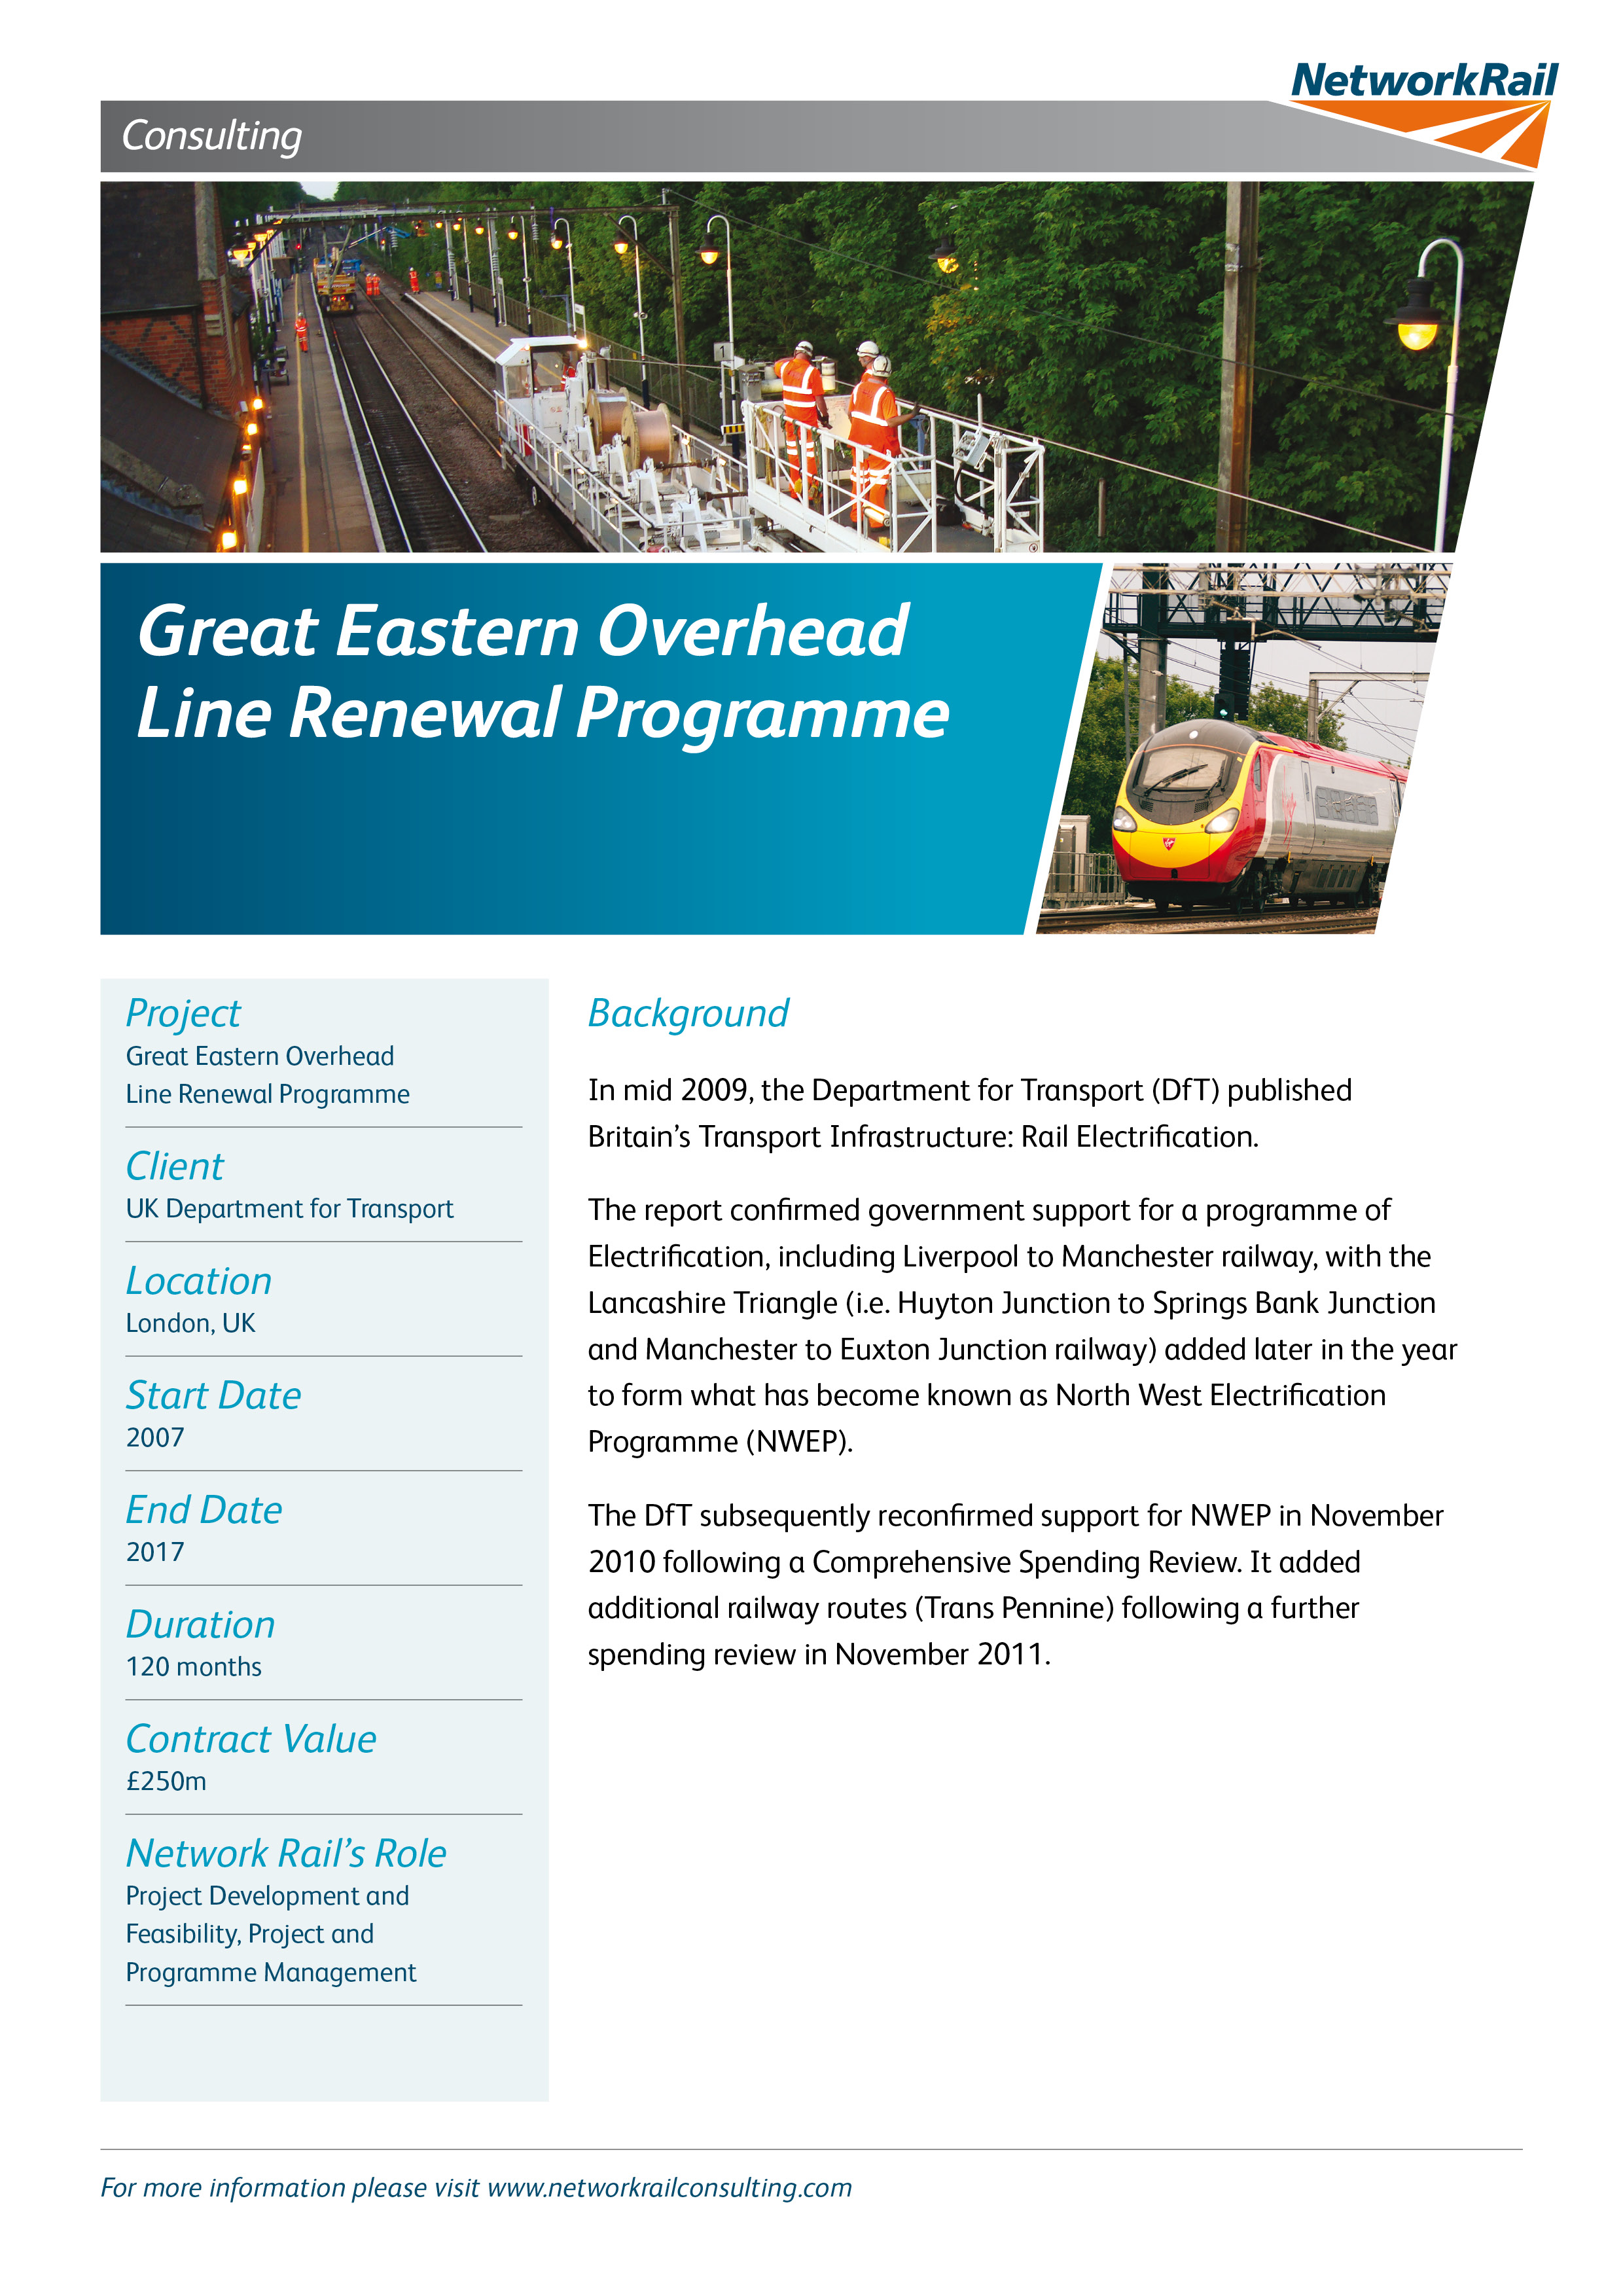 Great Eastern Overhead Line Renewal Programme